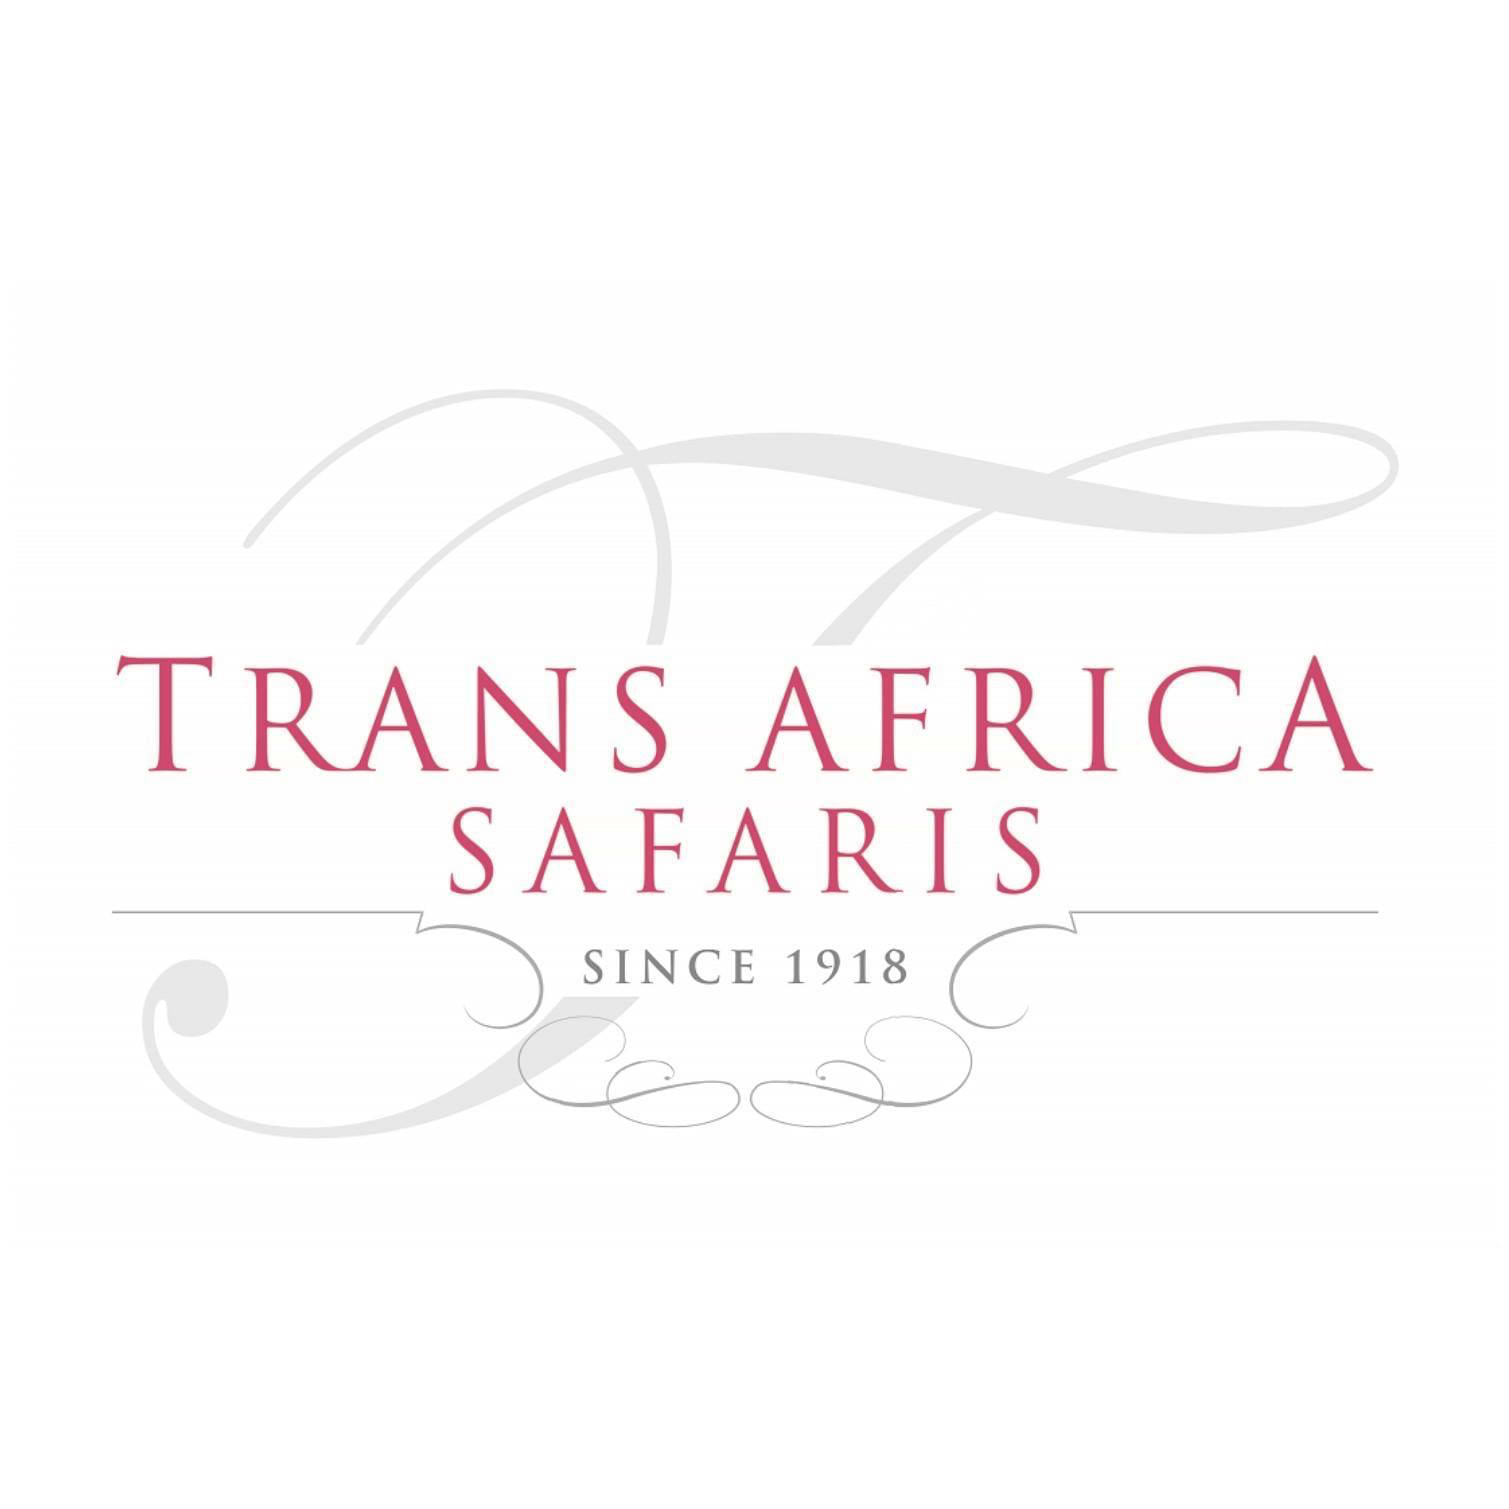 files/trans-africa-logo.png